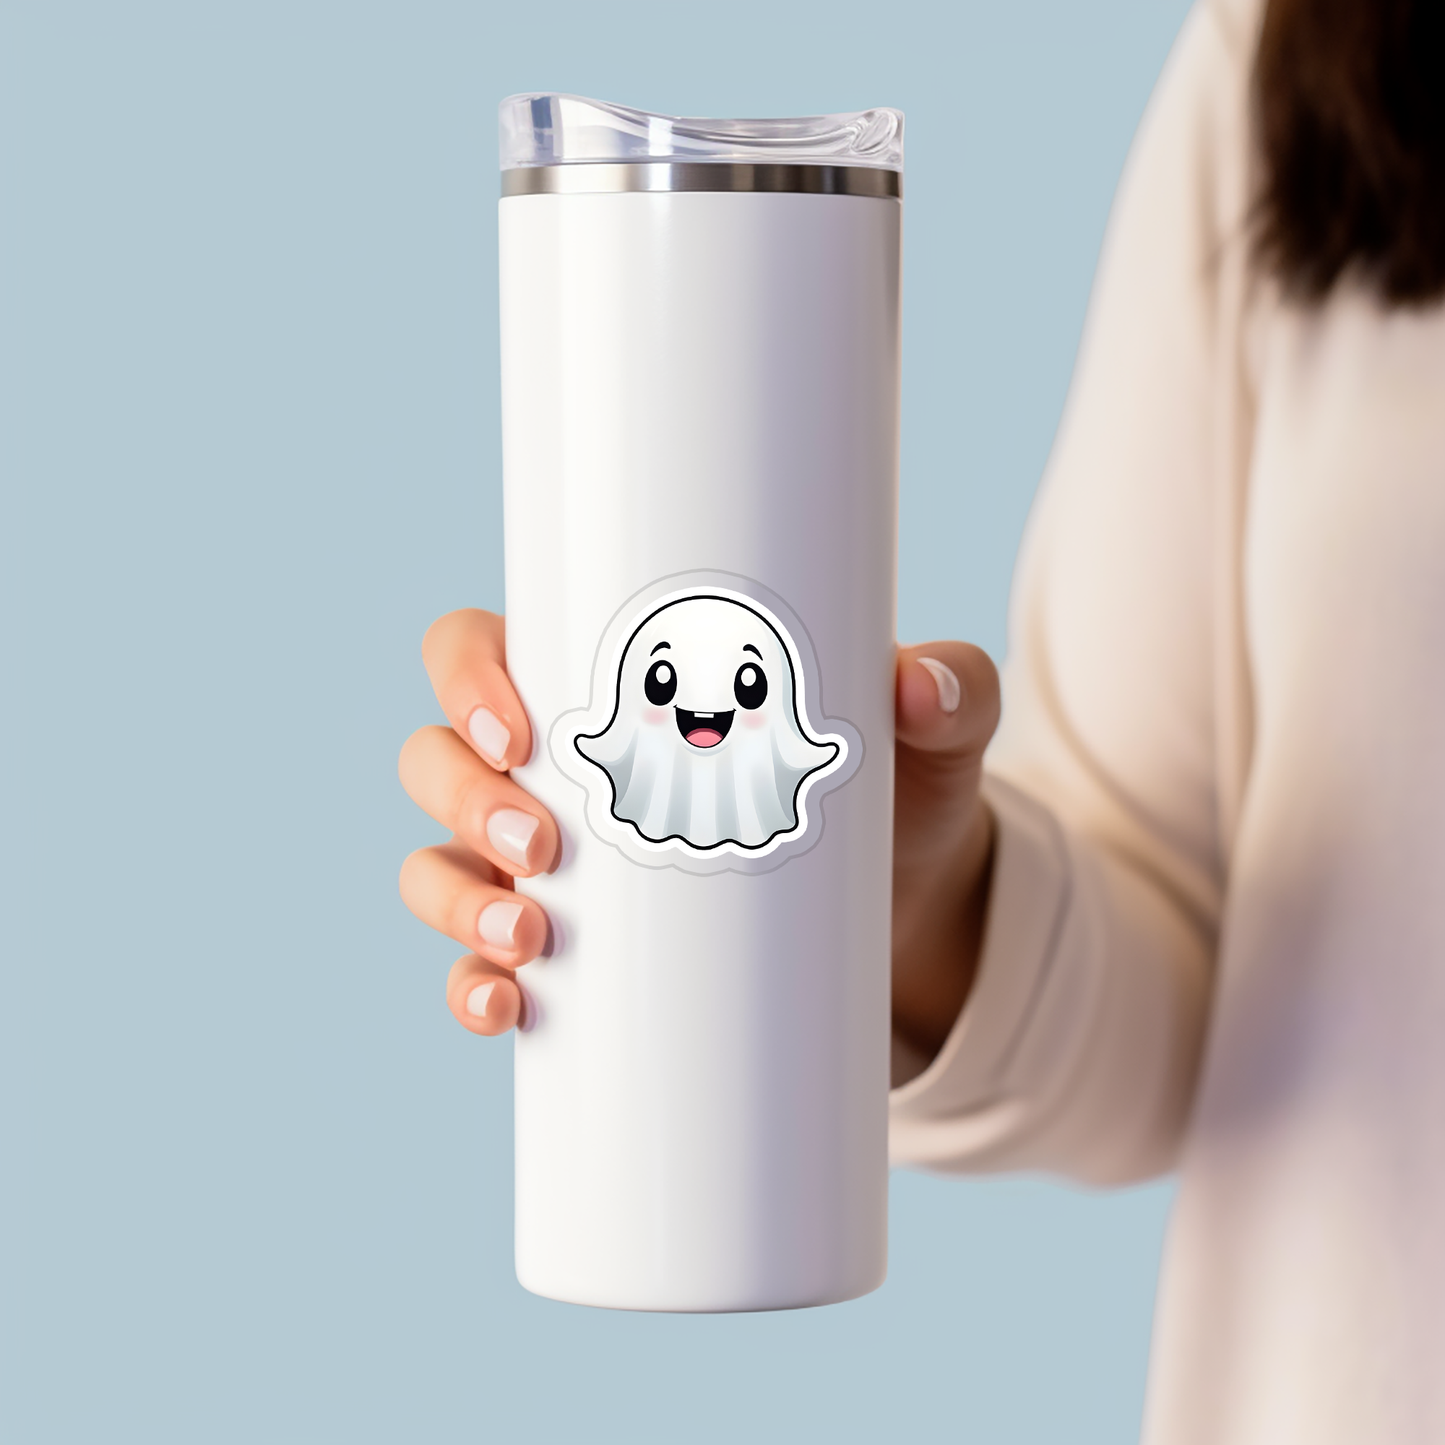 Friendly ghost sticker - Laptop Sticker - Water bottle Sticker - Cute vinyl sticker